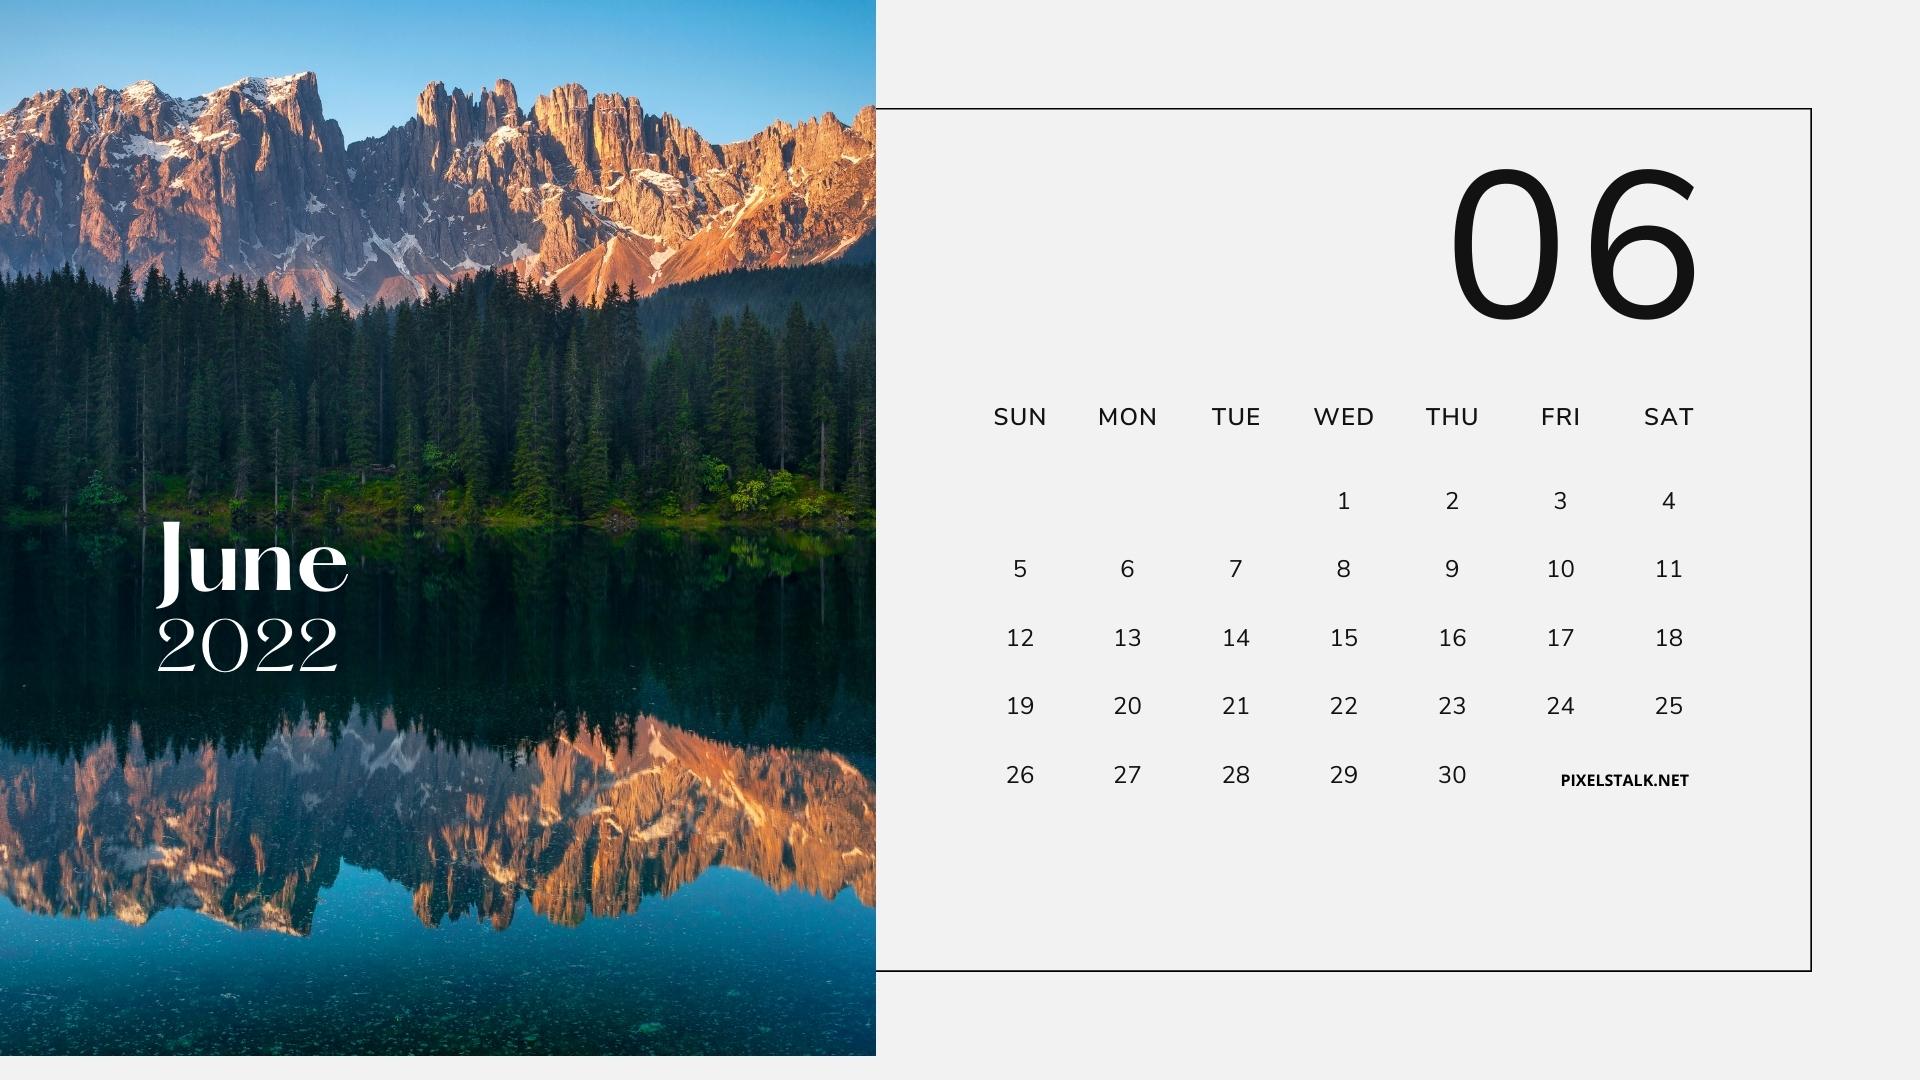 June 2022 wallpapers  55 FREE calendars for your desktop  phone